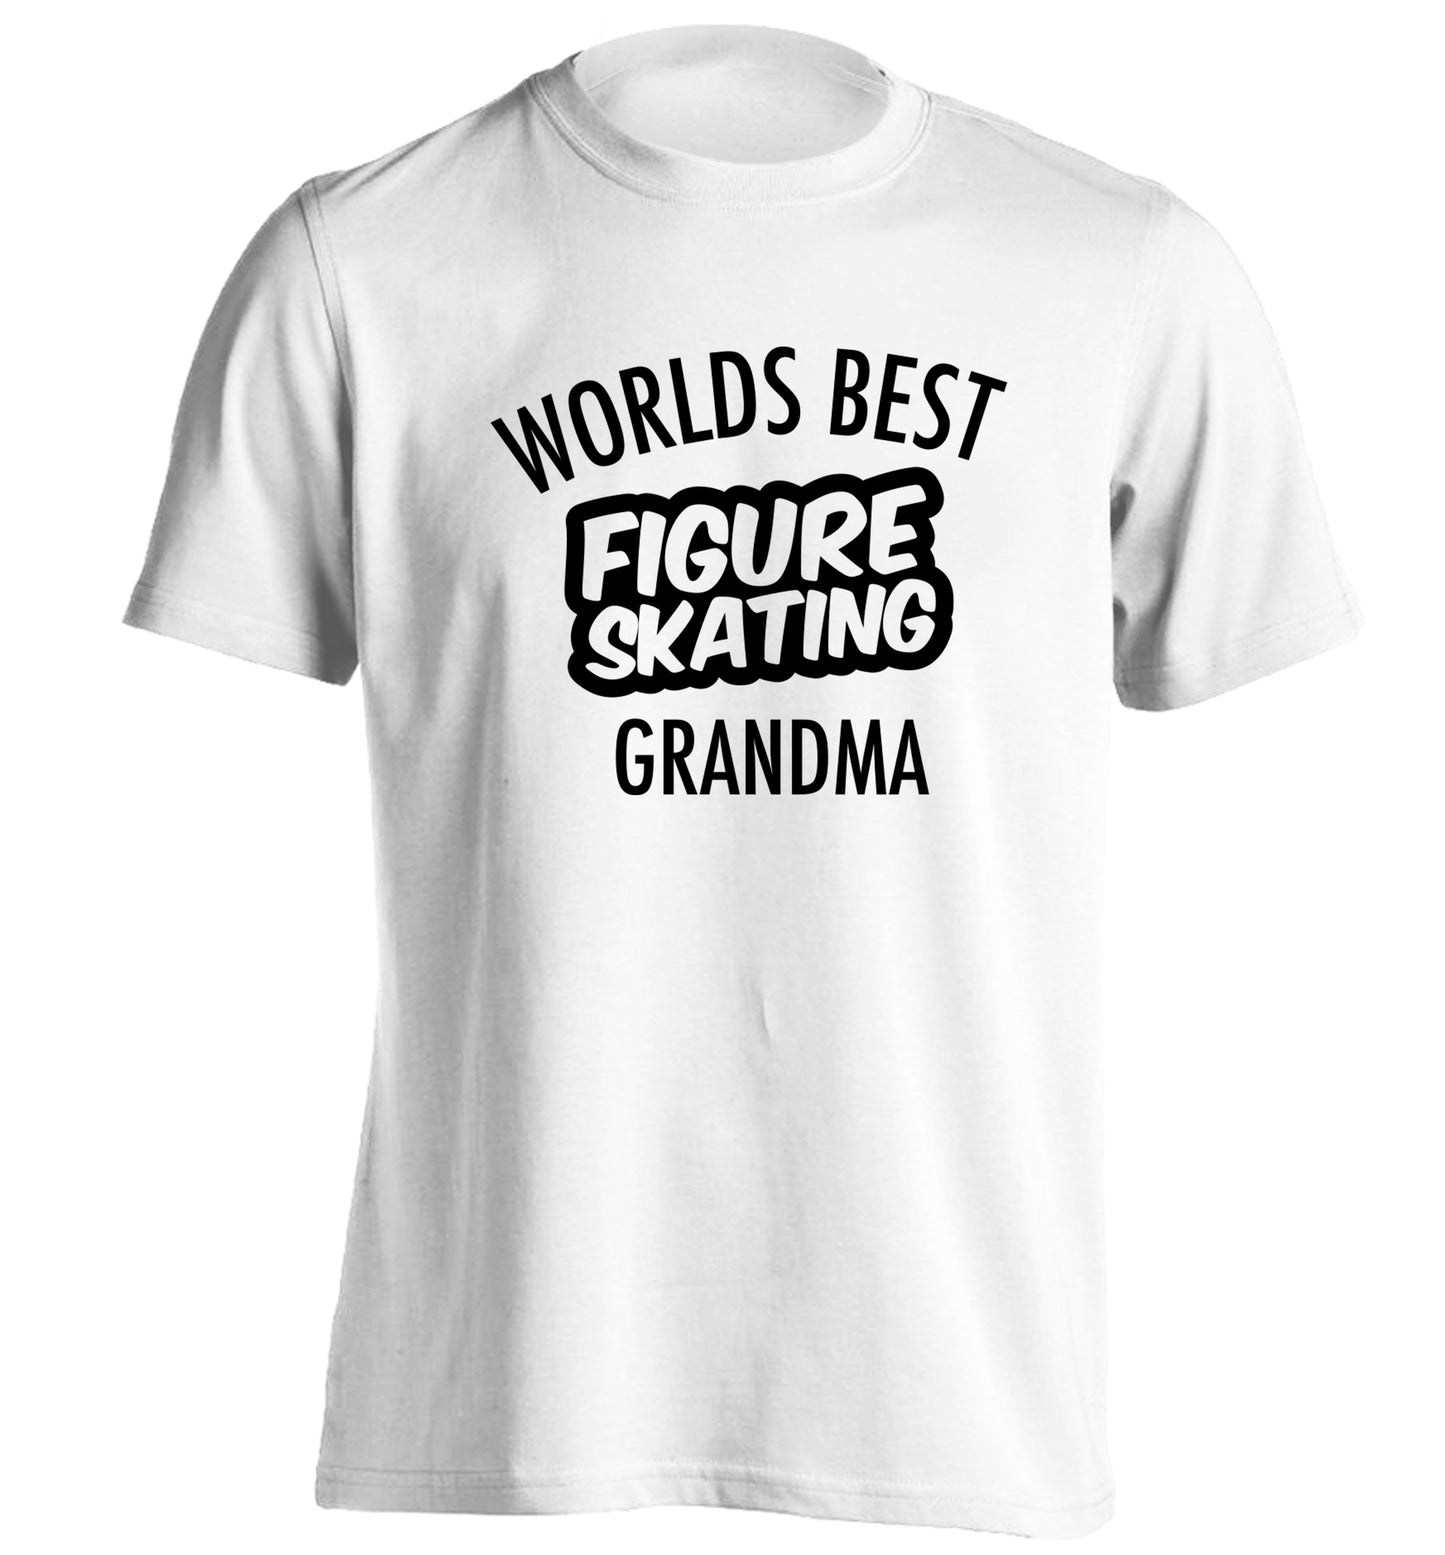 Worlds best figure skating grandma adults unisexwhite Tshirt 2XL